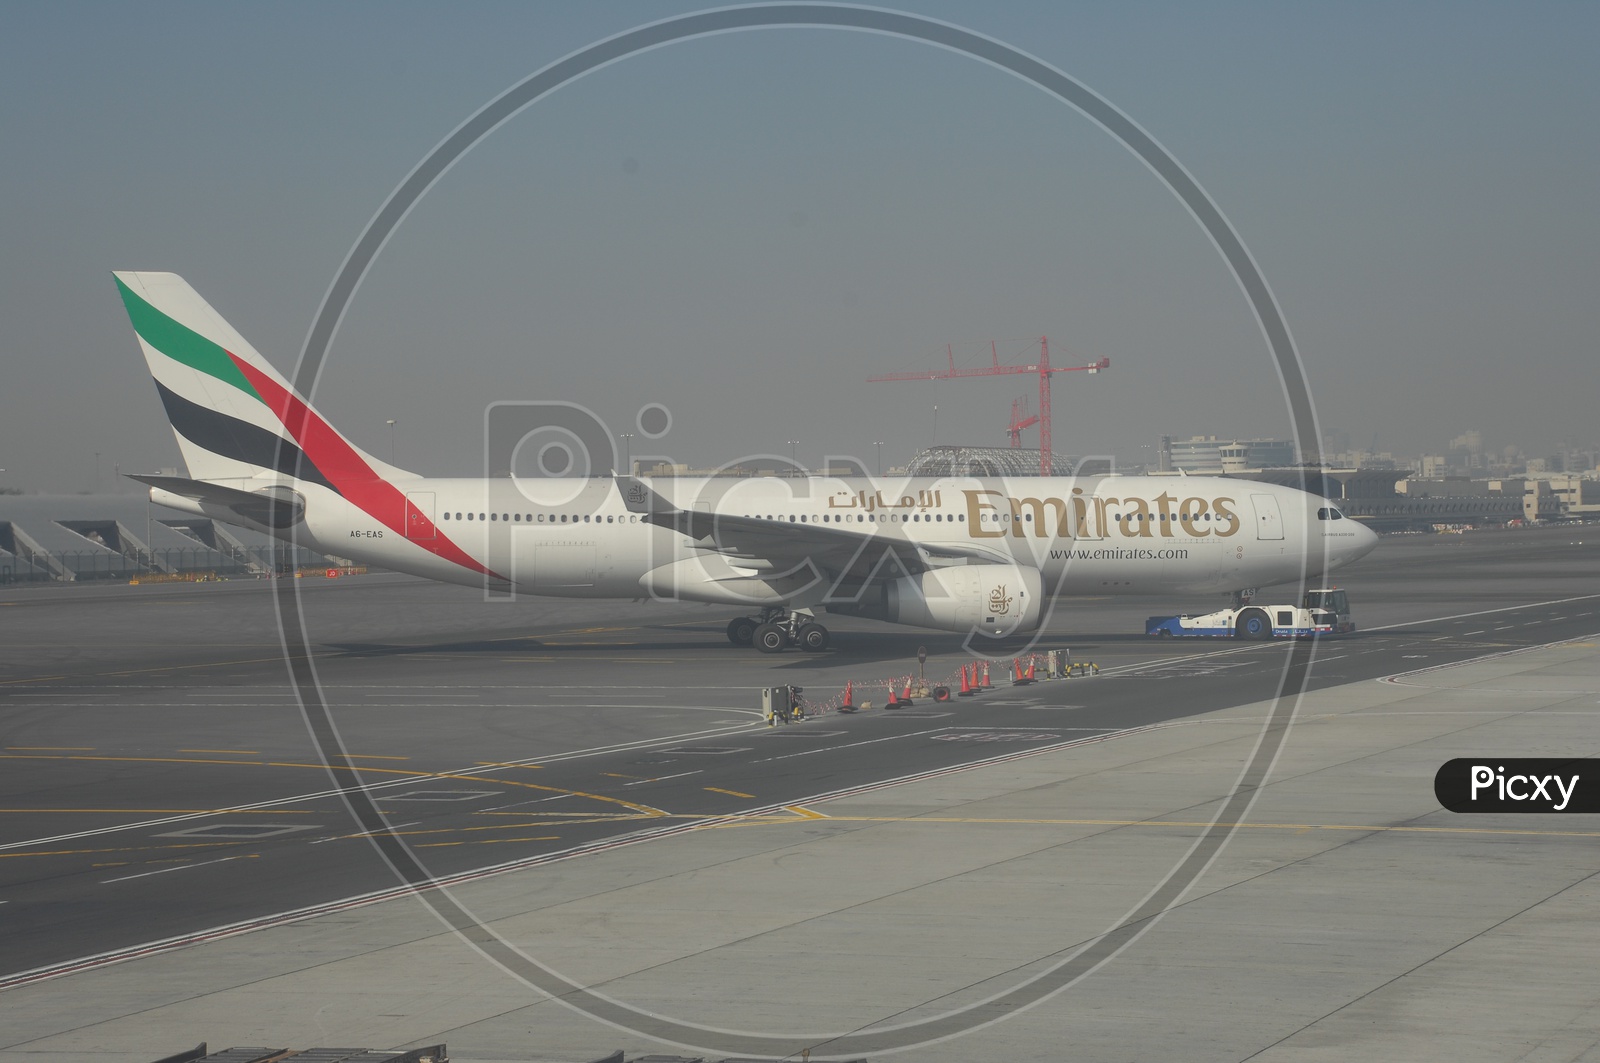 Emirates flight waiting in Airport